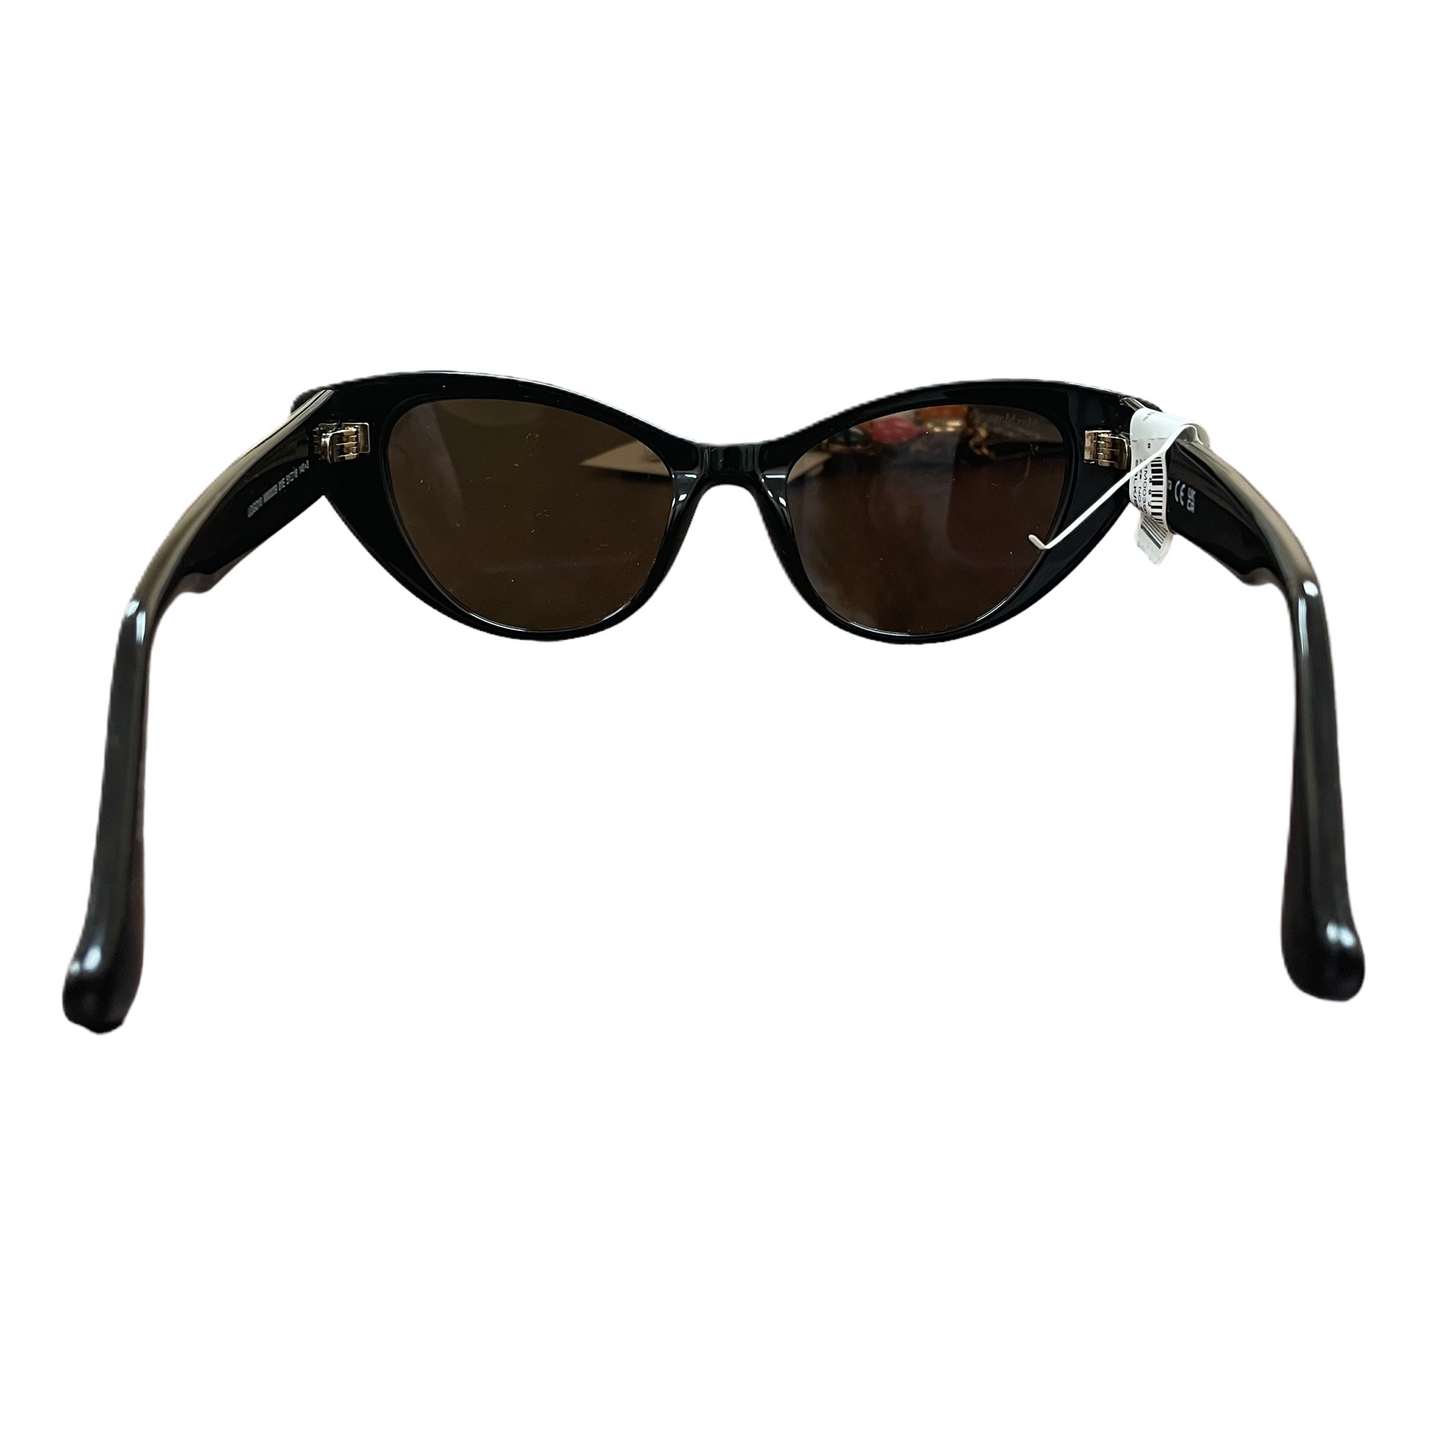 Sunglasses Designer By Max Mara